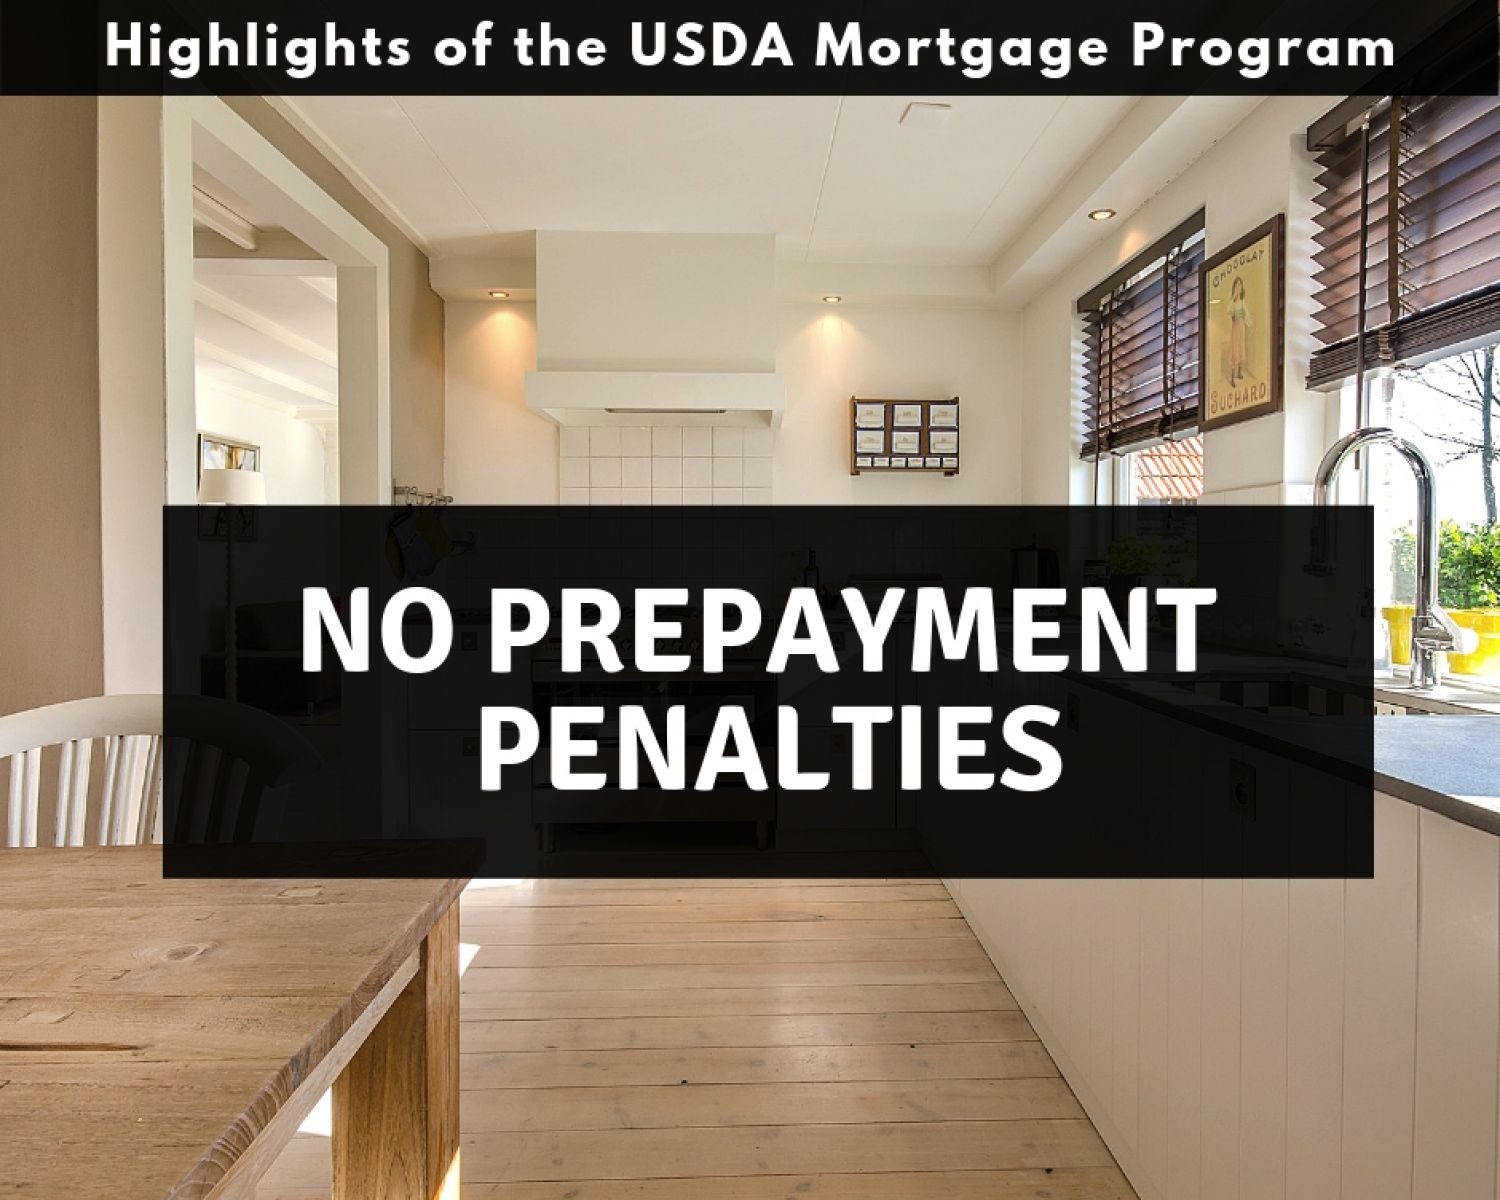 Pennsylvania USDA Mortgages have no prepayment penalties